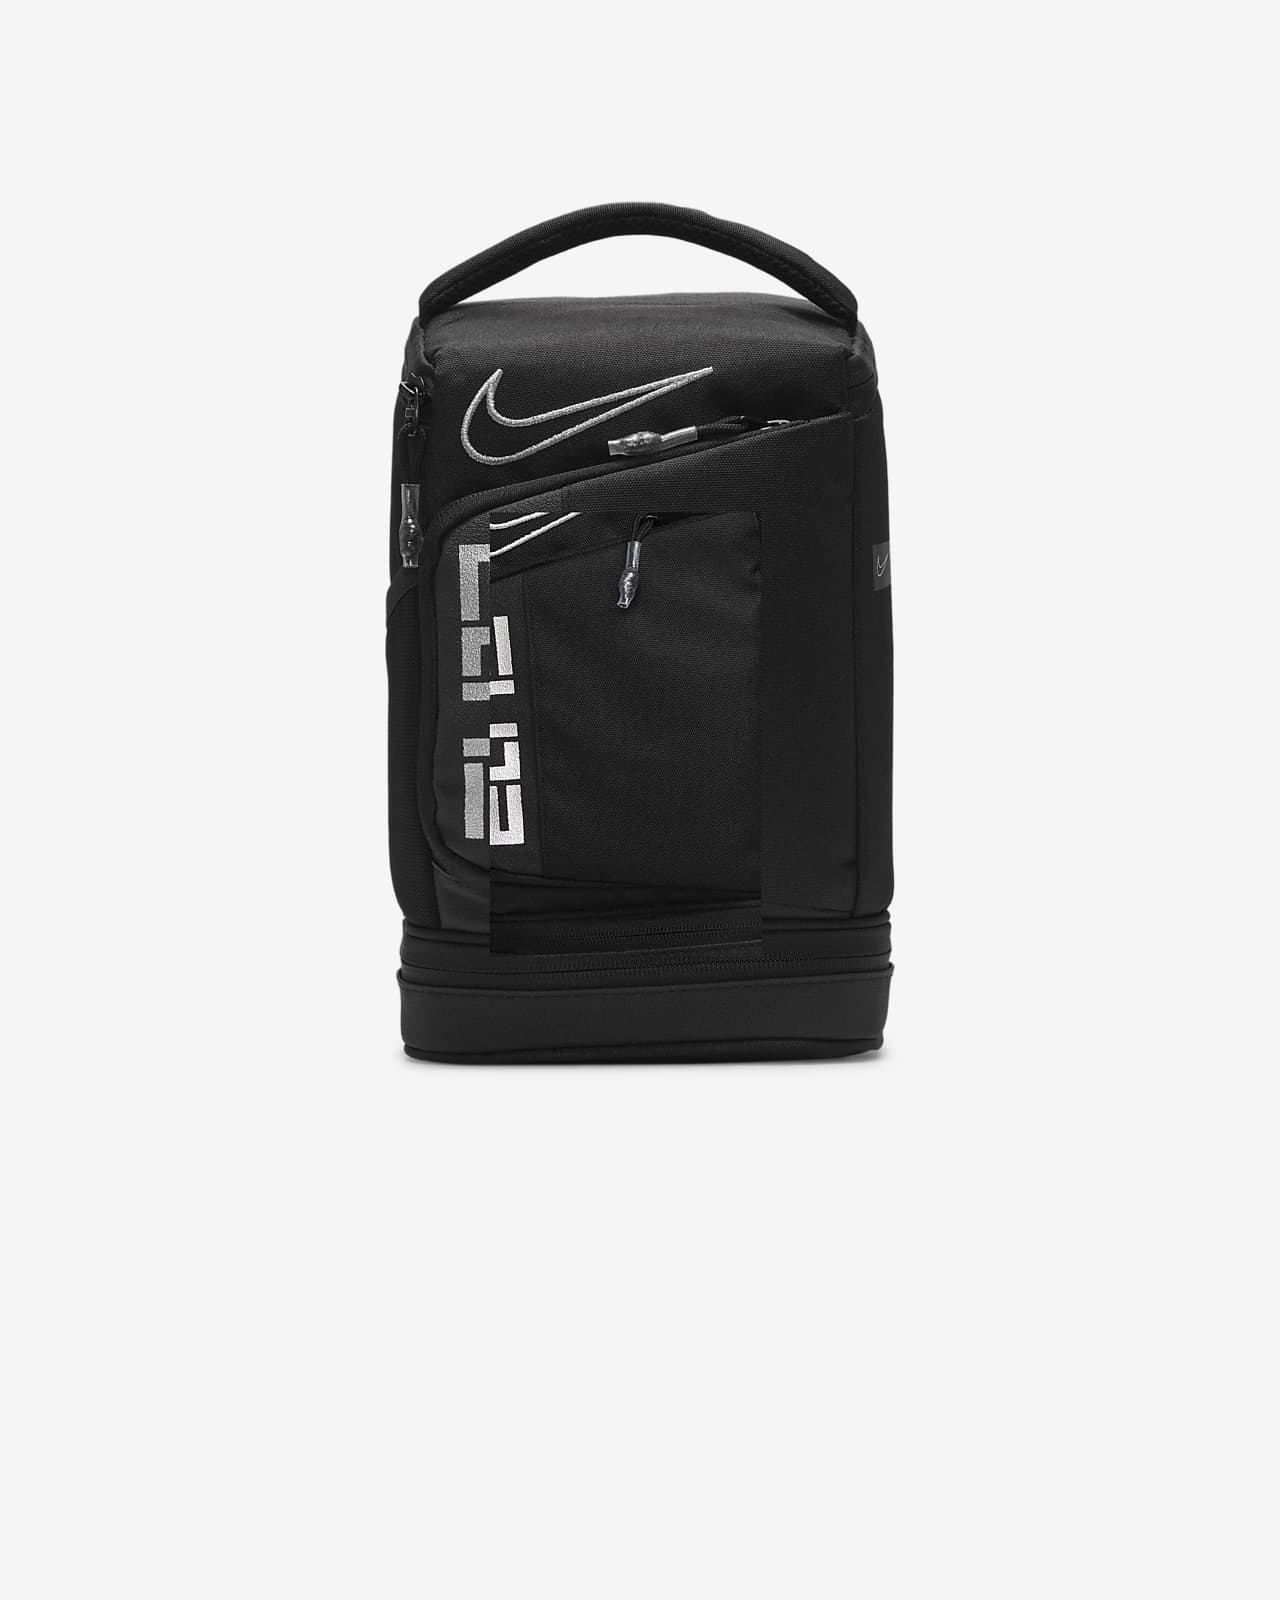 Bolsa de almuerzo Nike Fuel Pack